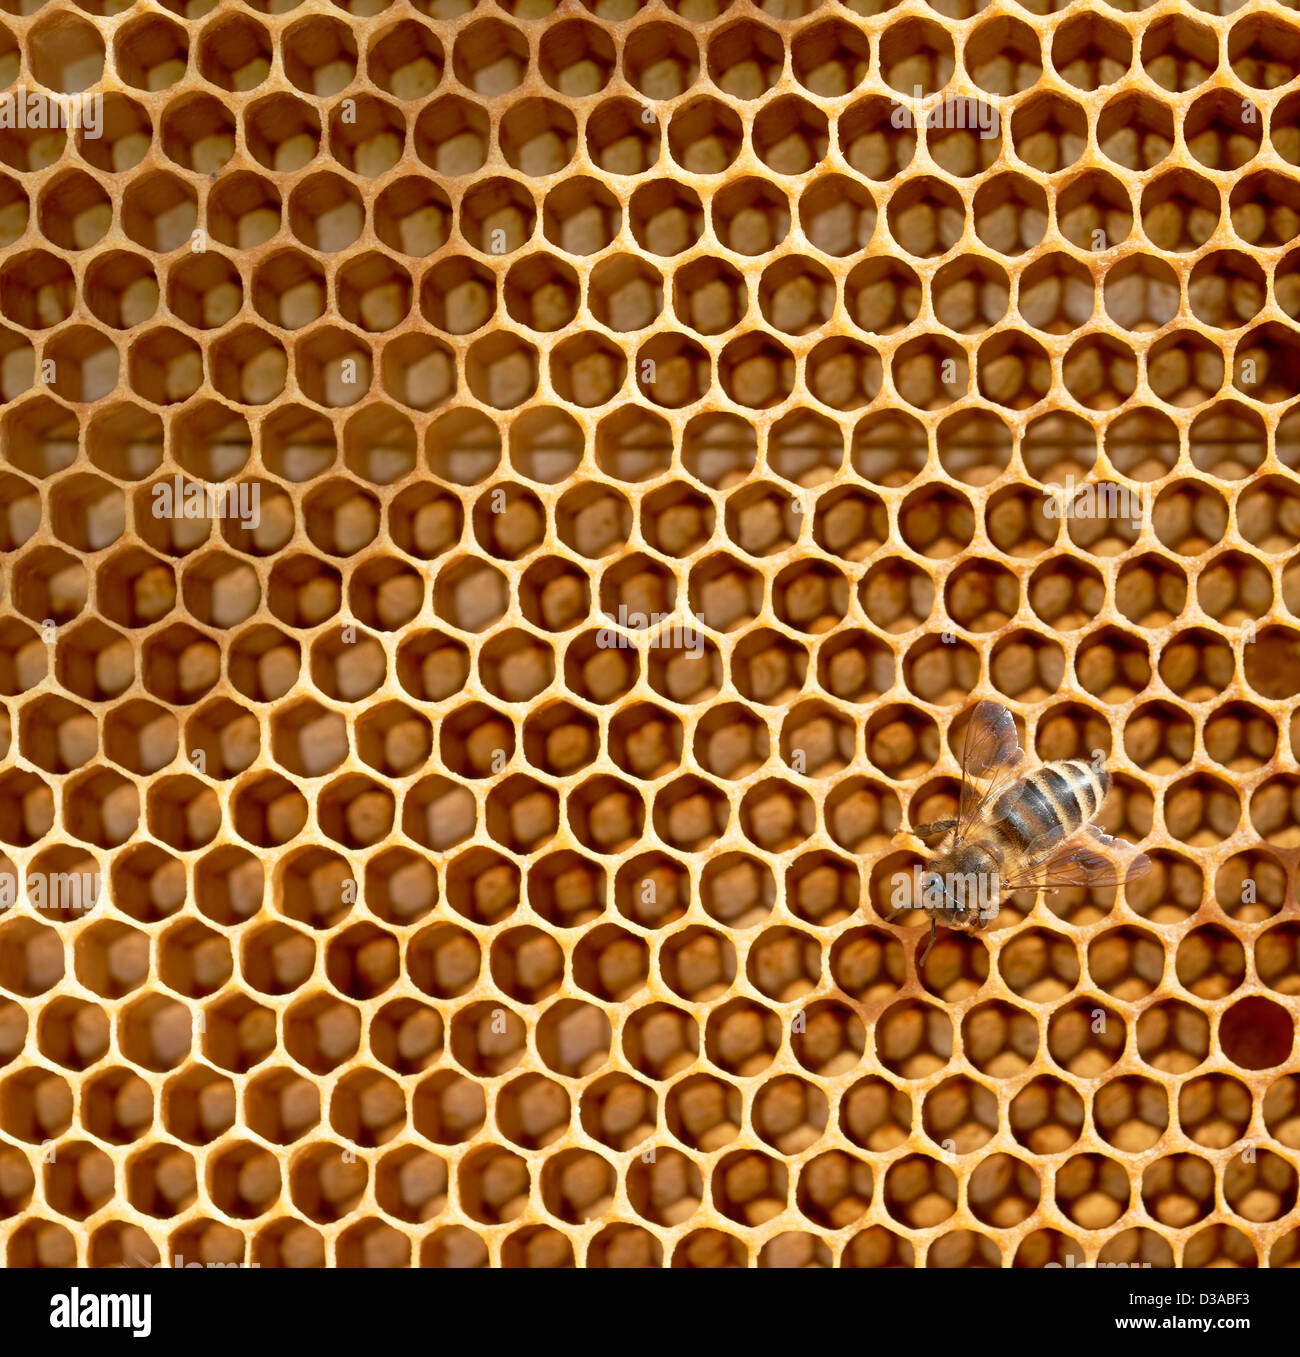 Nido e lavoratore honey bee close up Foto Stock